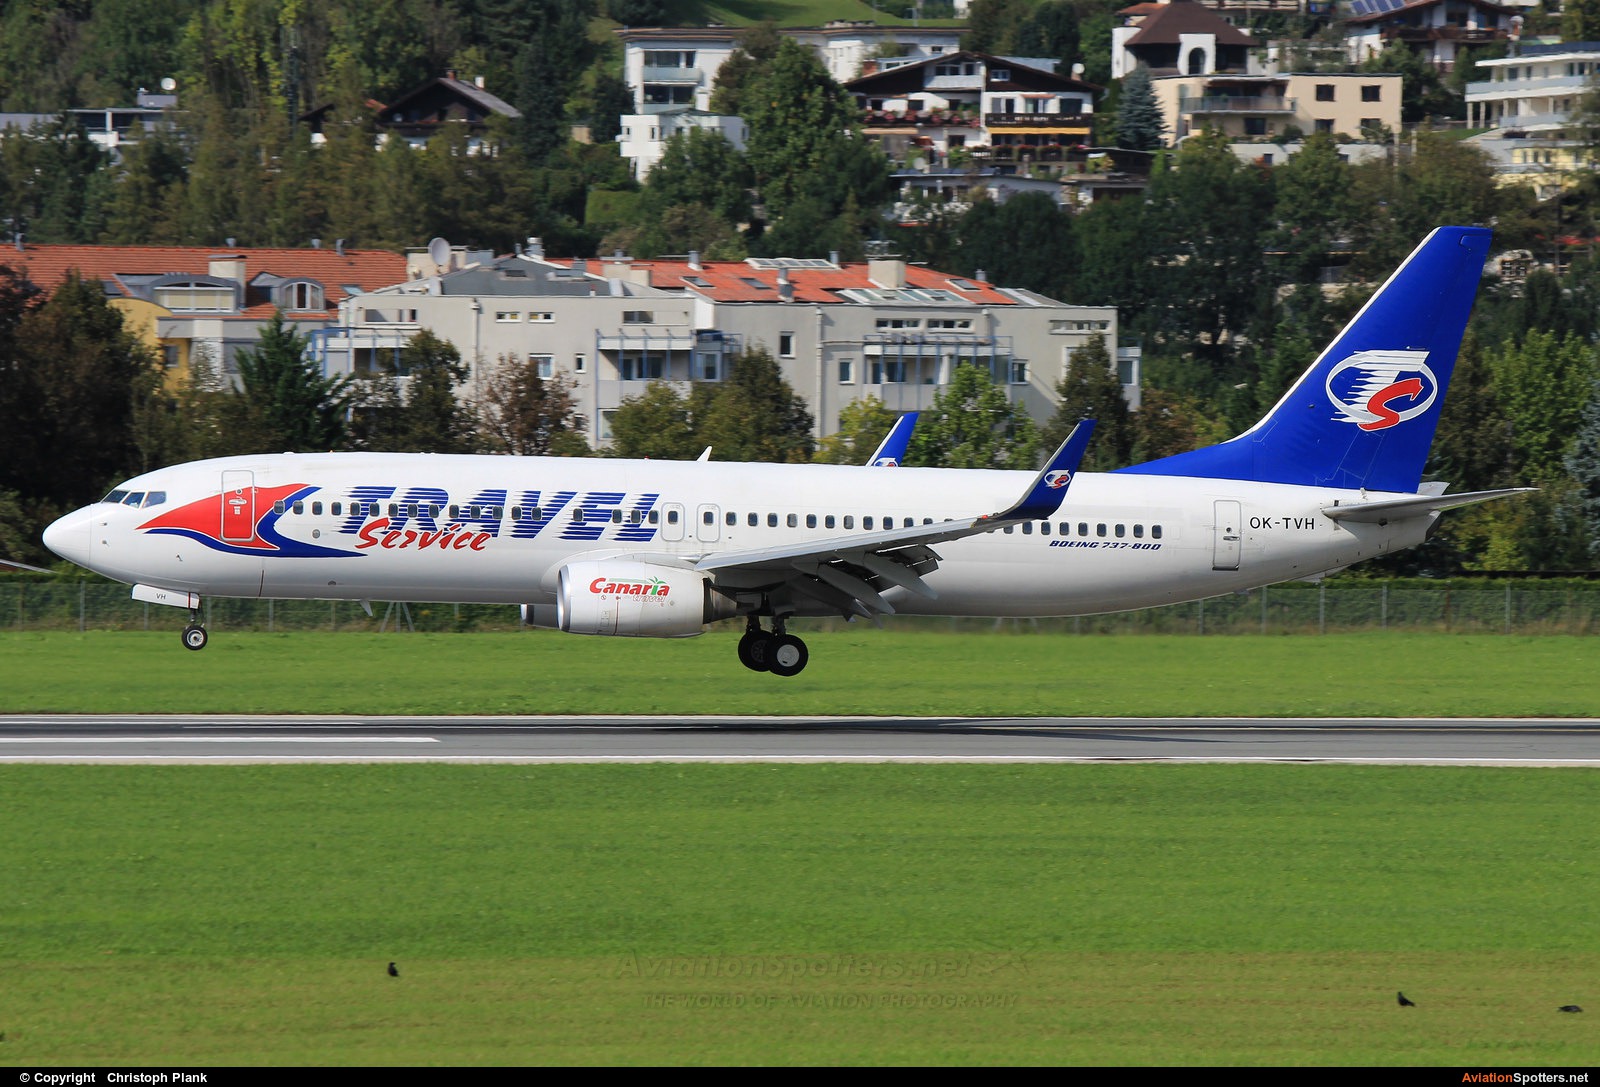 Travel Service  -  737-800  (OK-TVH) By Christoph Plank (gigglflyniki)